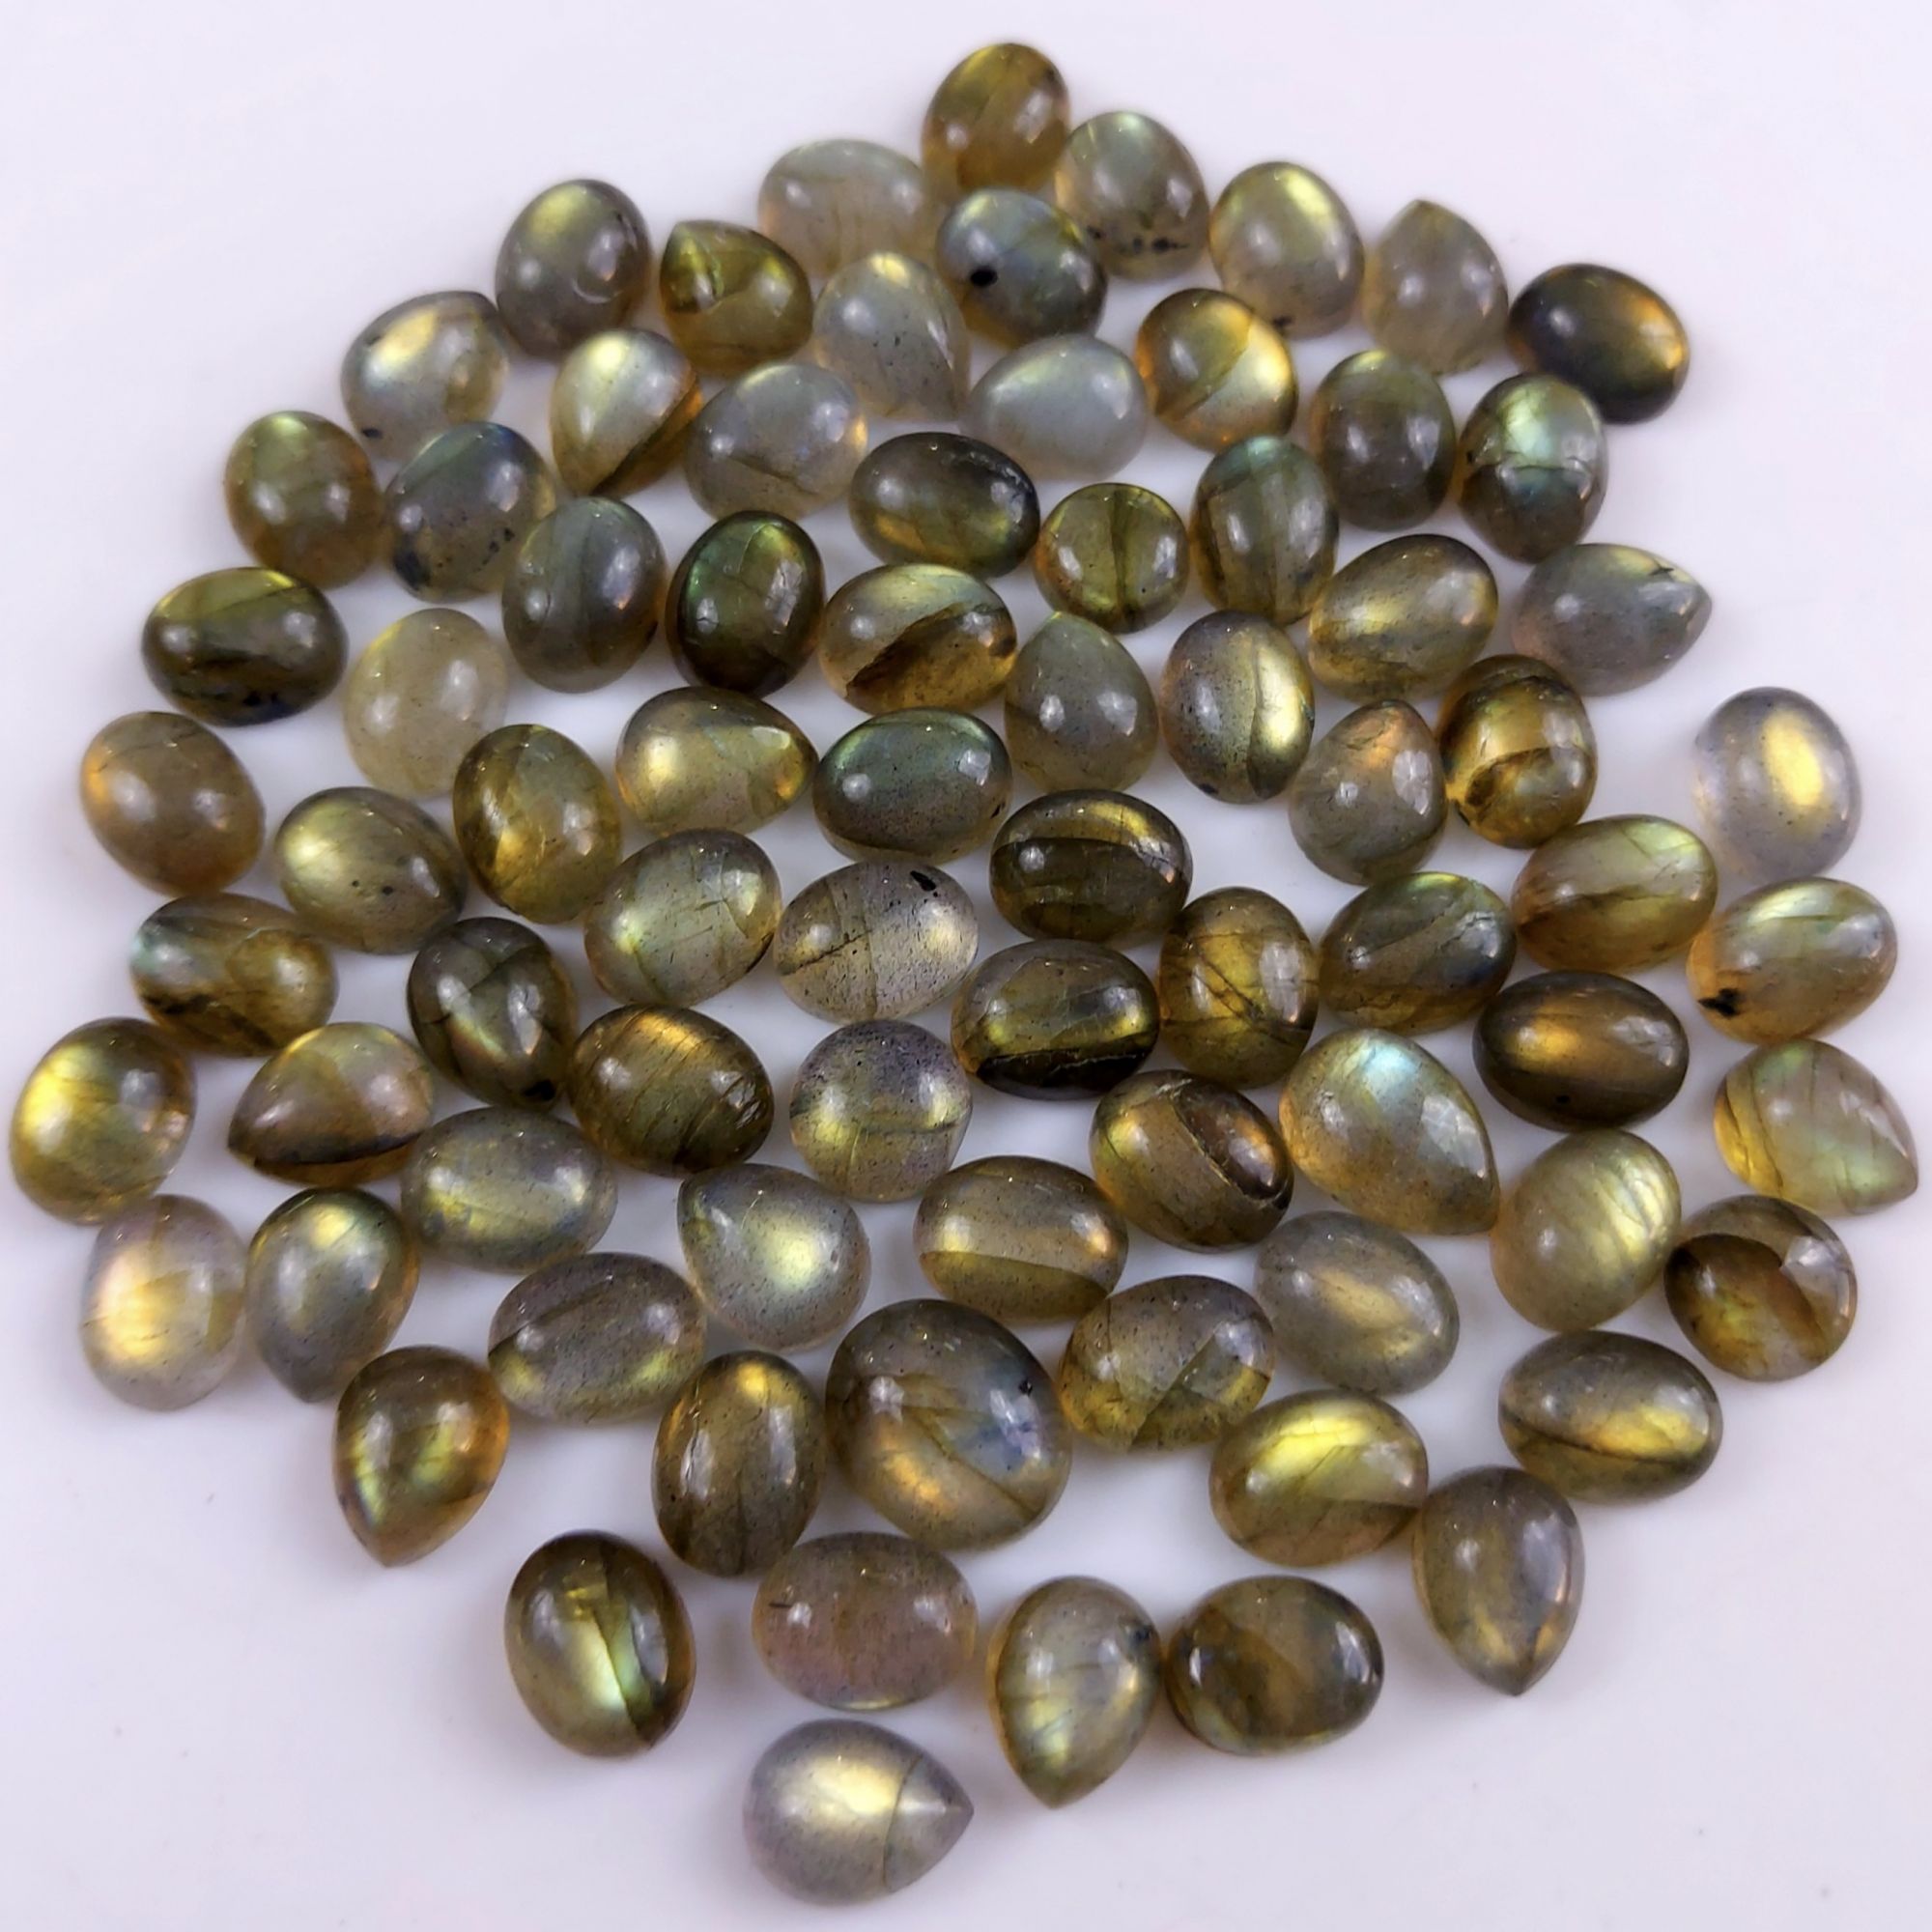 78 Pcs188Cts Natural Multifire Labradorite Loose Cabochon Gemstone Lot for Jewelry Making  9x7 6x4mm#1063